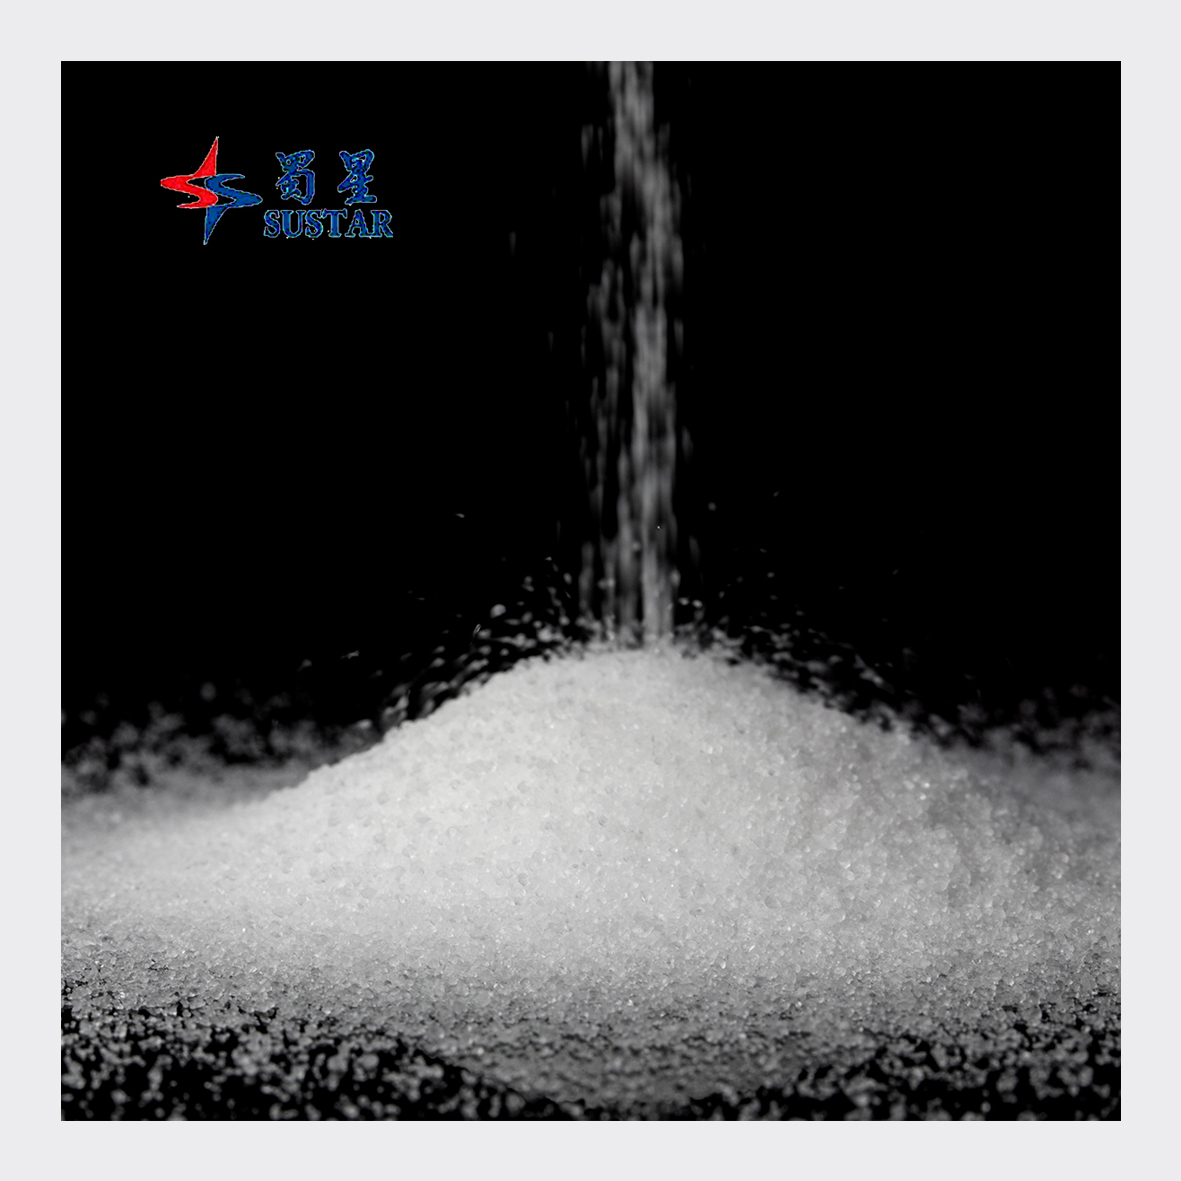 Calcium Lactate White Crystalline Powder Animal Feed Additive